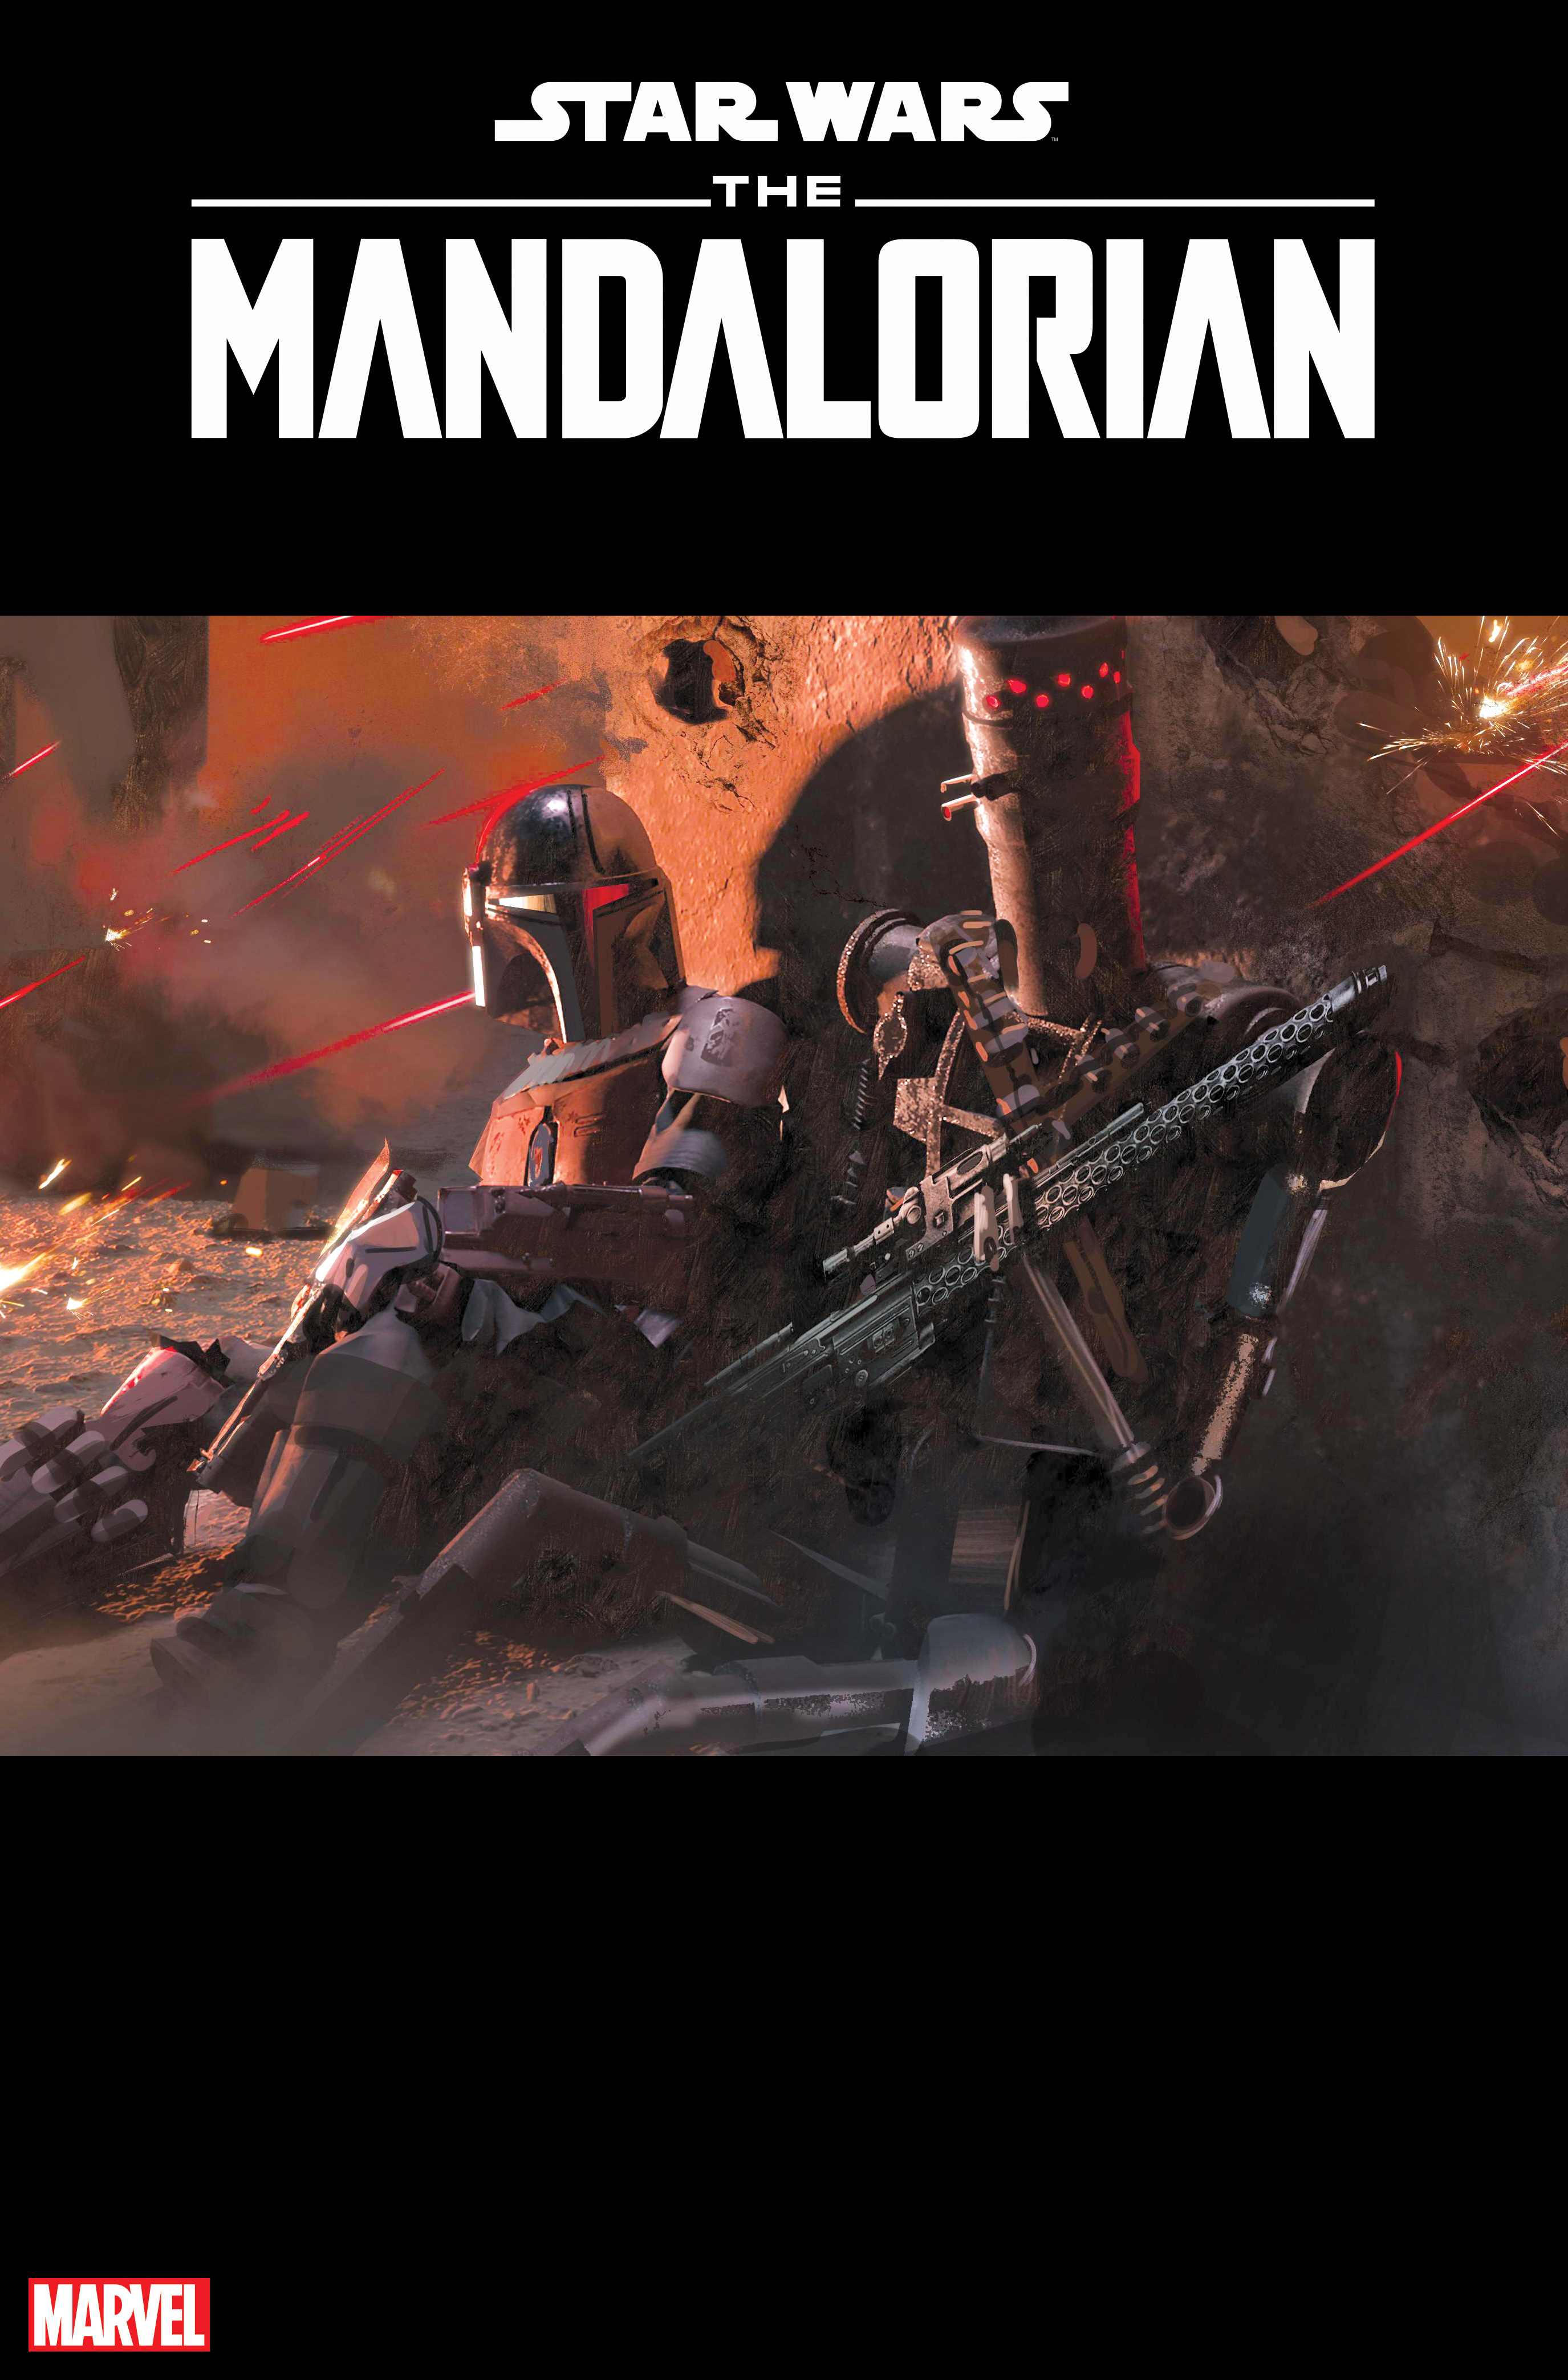 Portada variante de Star Wars: The Mandalorian #1 por Nick Gindaux